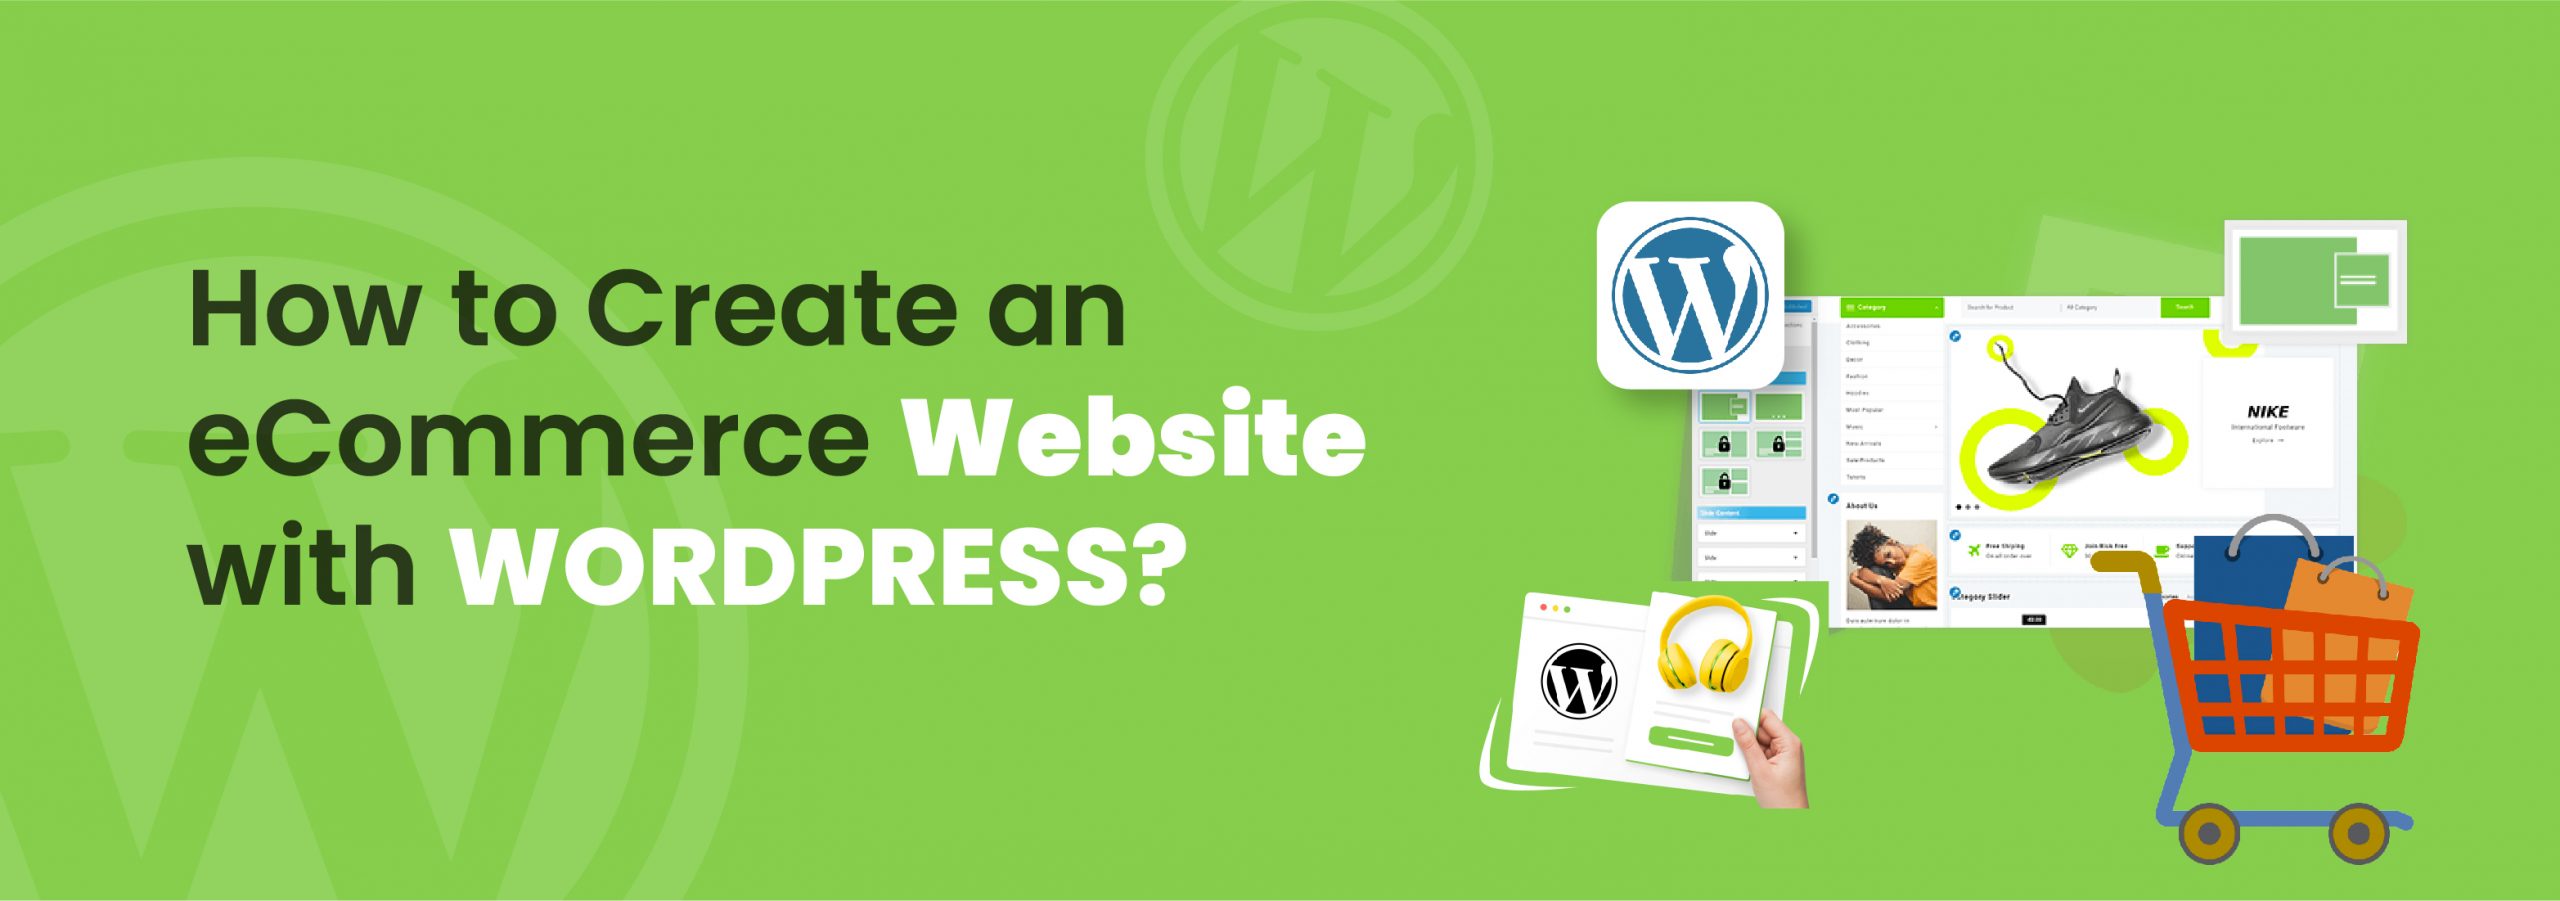 eCommerce Website with WordPress